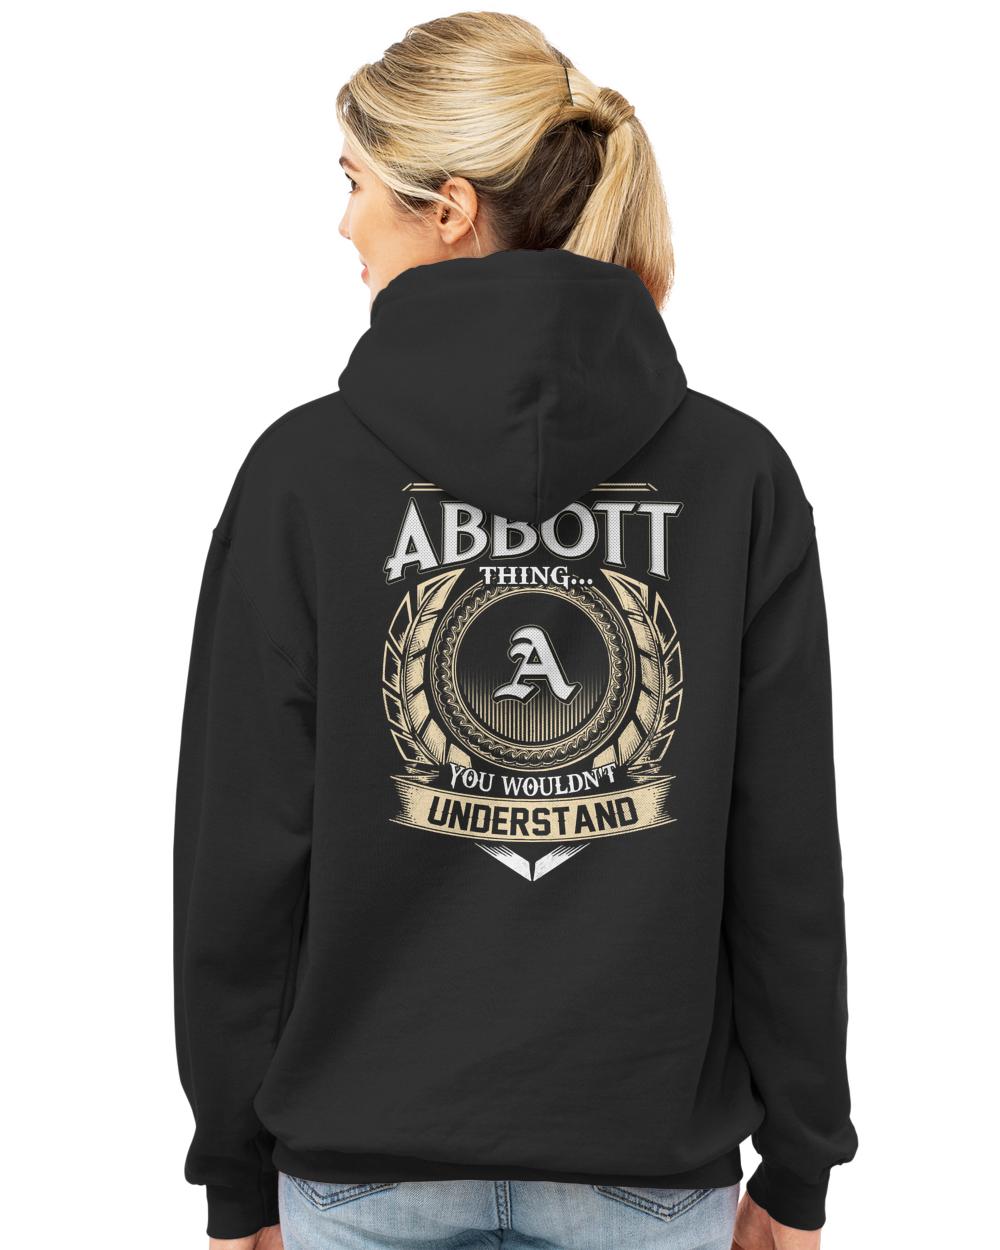 ABBOTT-13K-46-01